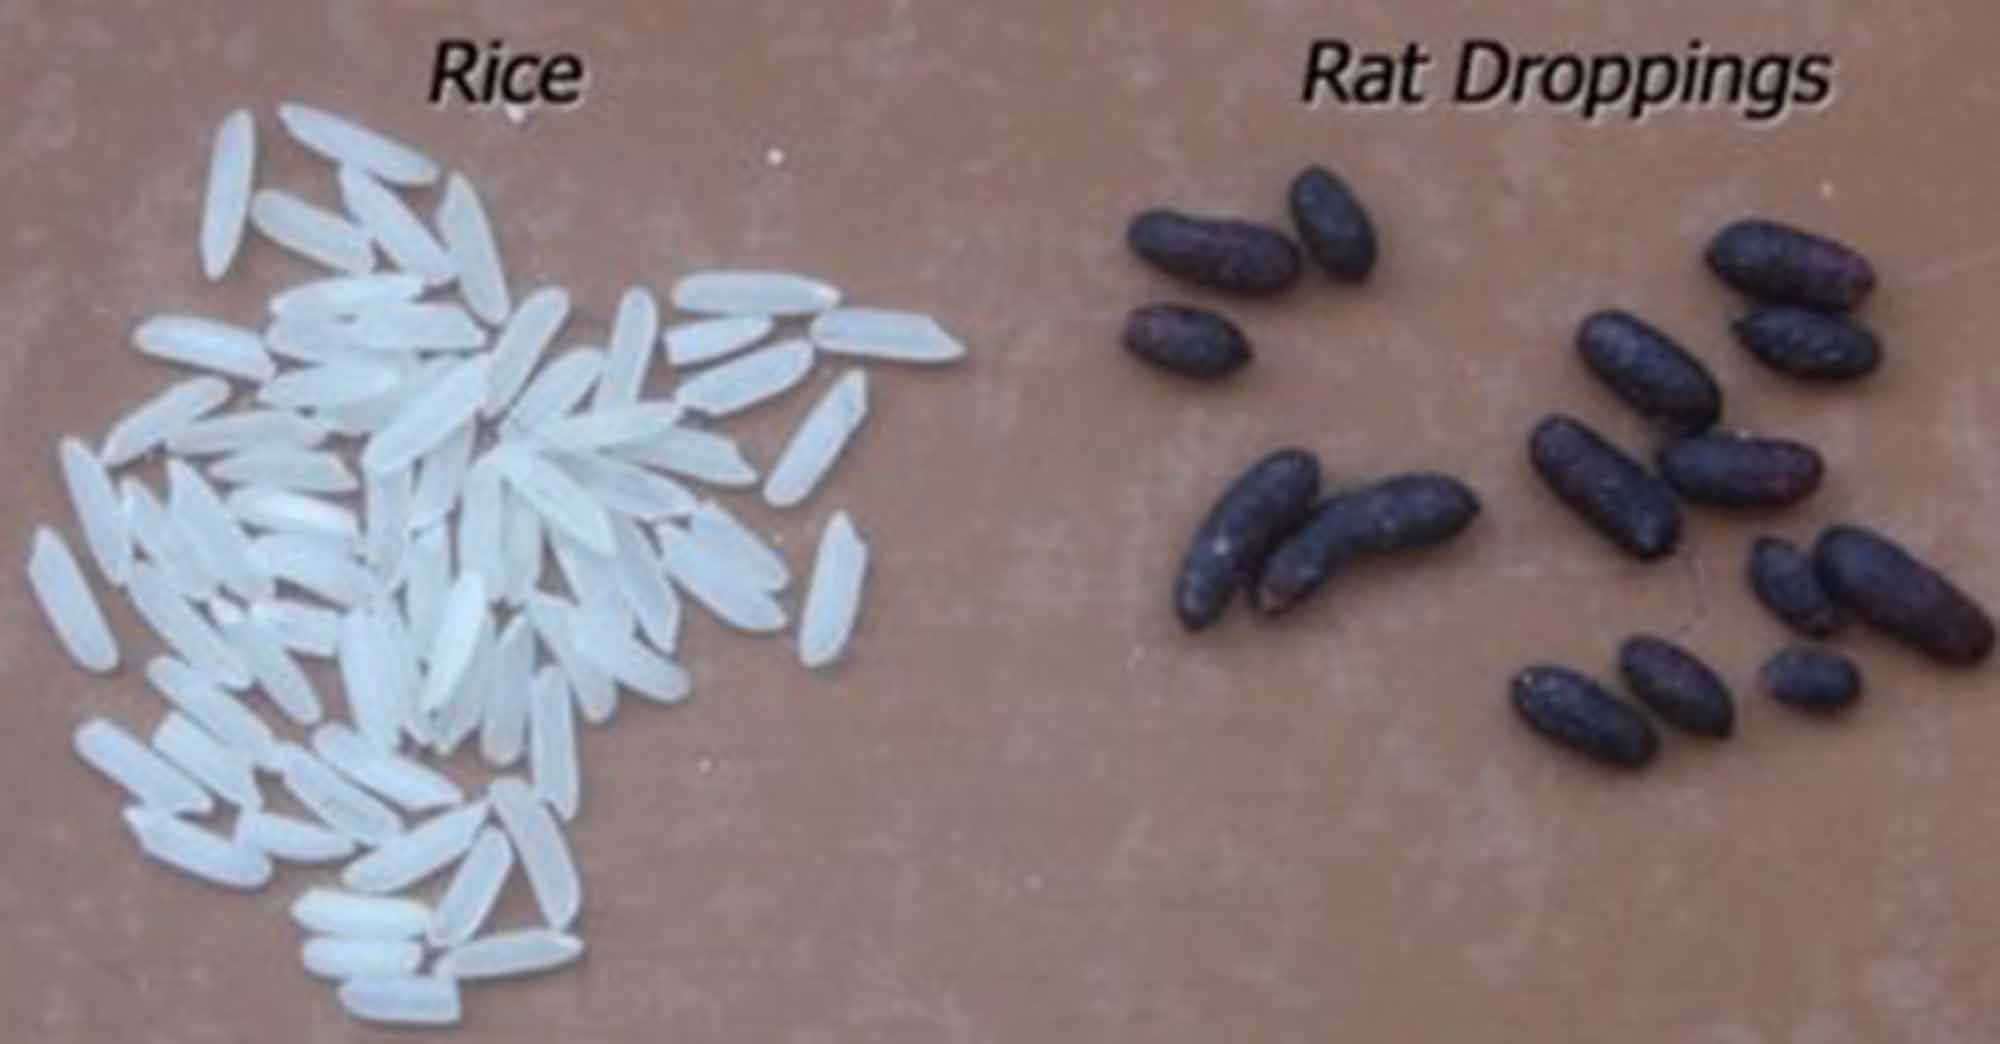 rat poo and rice